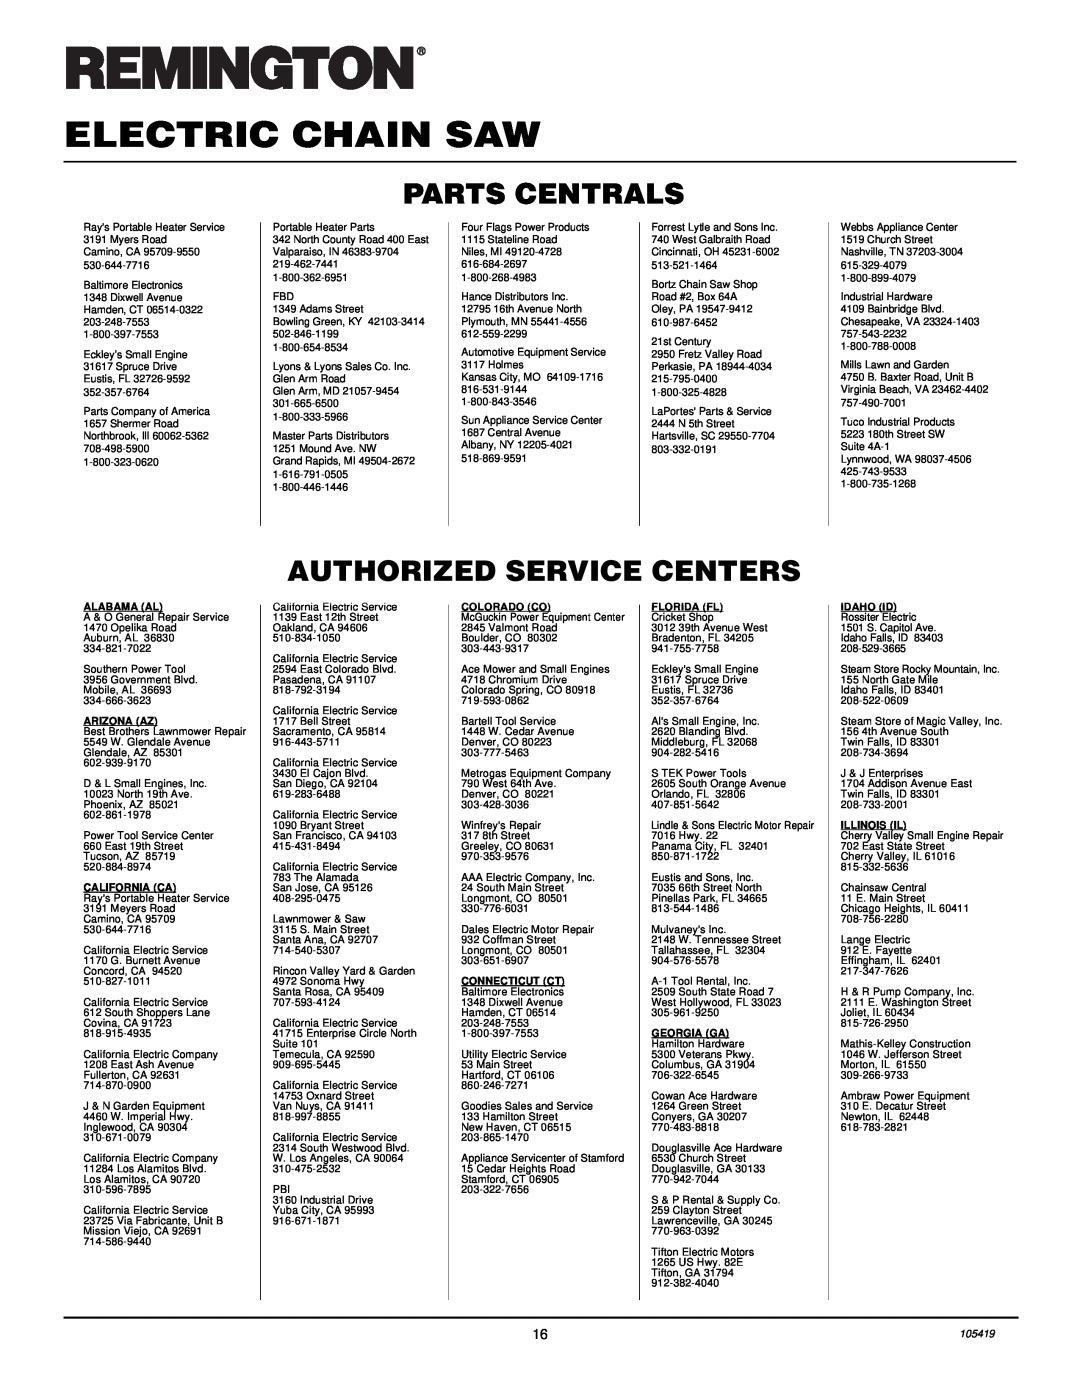 Desa 075762J Parts Centrals, Authorized Service Centers, Electric Chain Saw, Alabama Al, Arizona Az, California Ca, 105419 